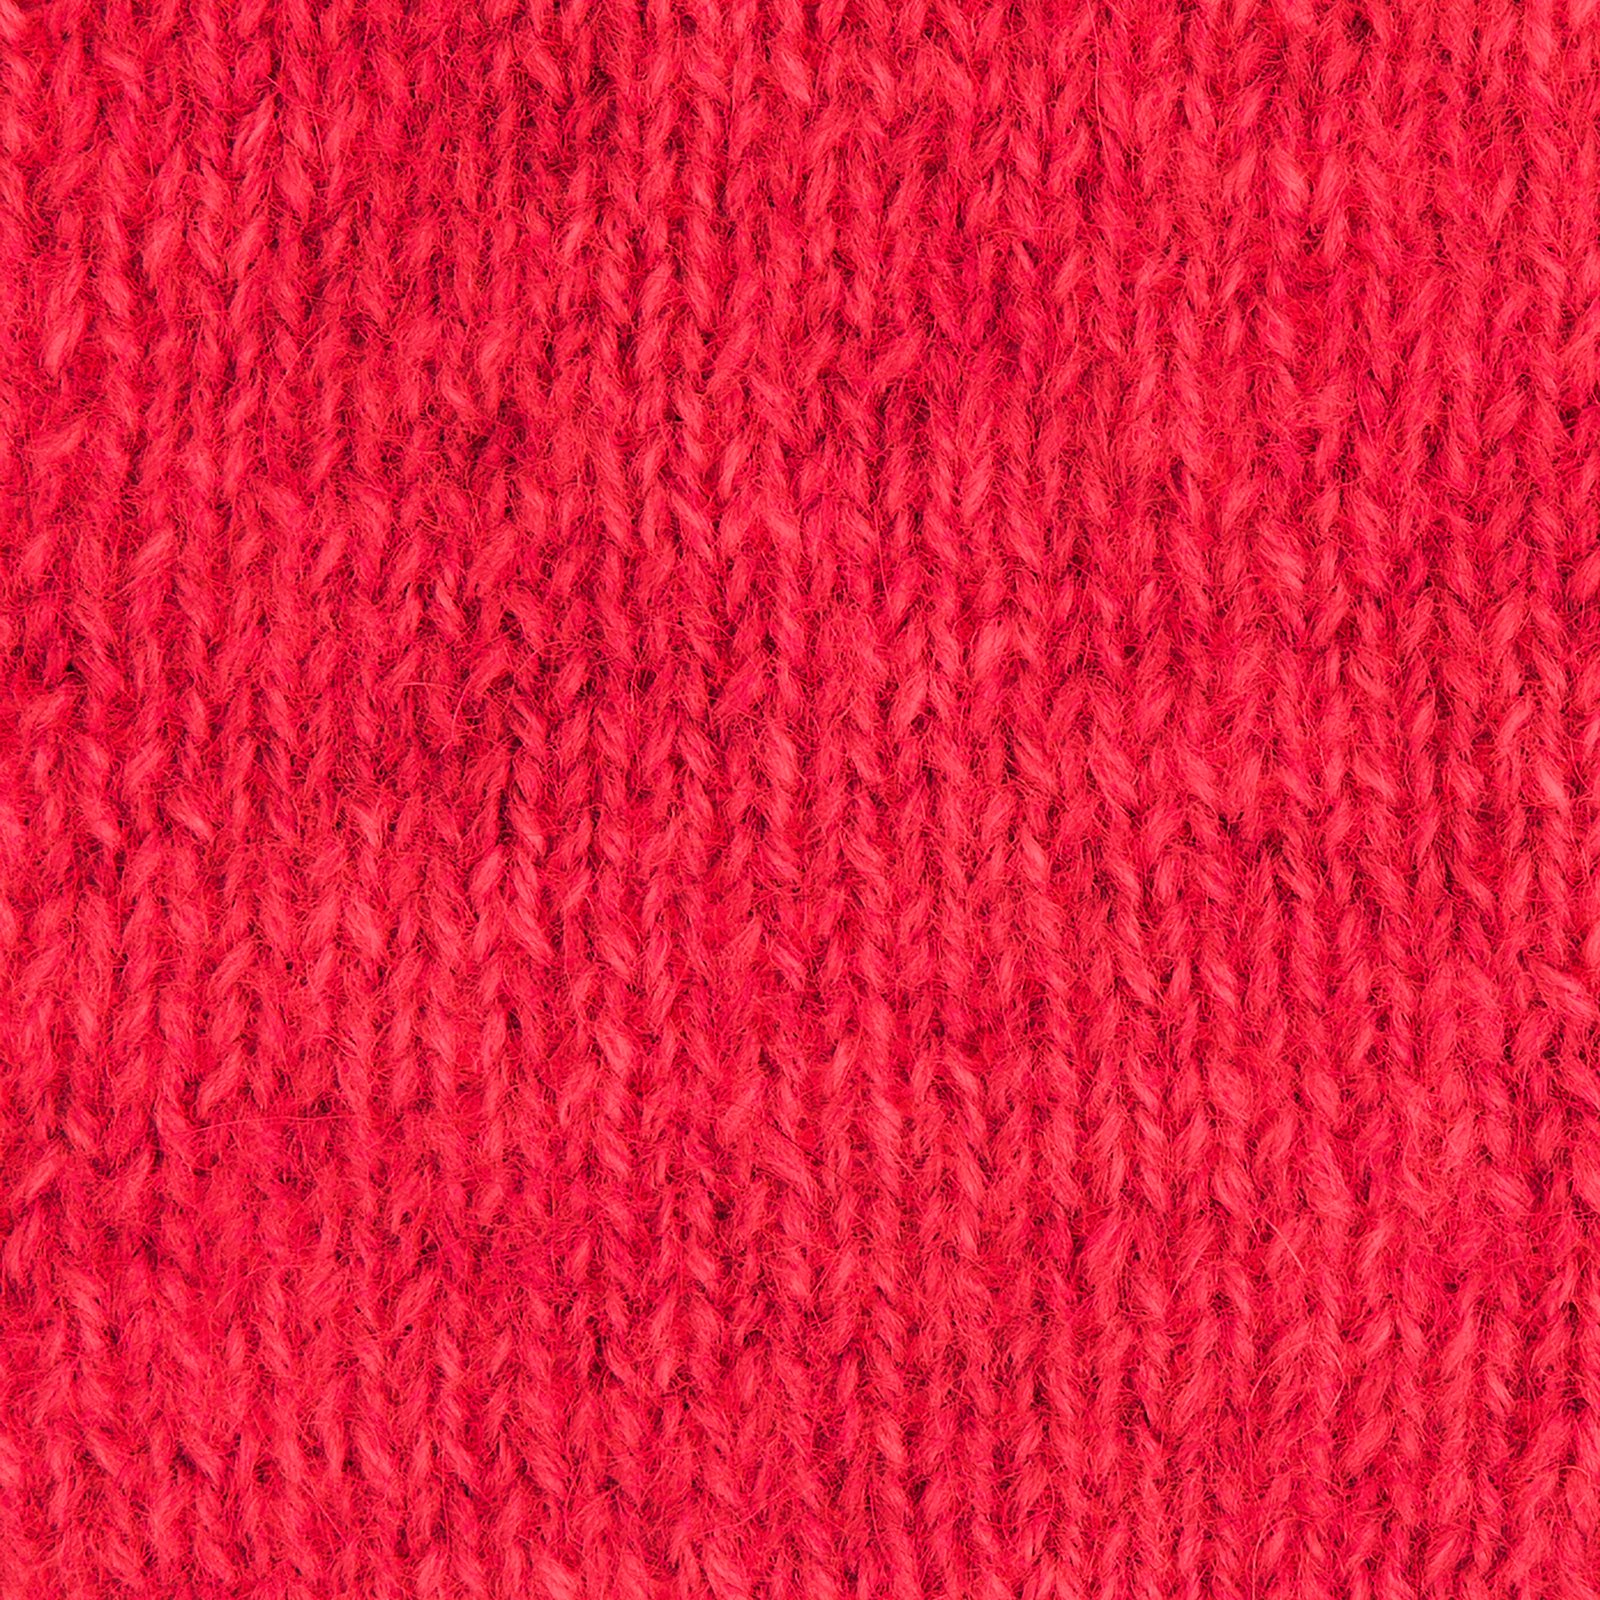 FRAYA, kid mohair mixed yarn "Fluffy", red 90066311_sskit